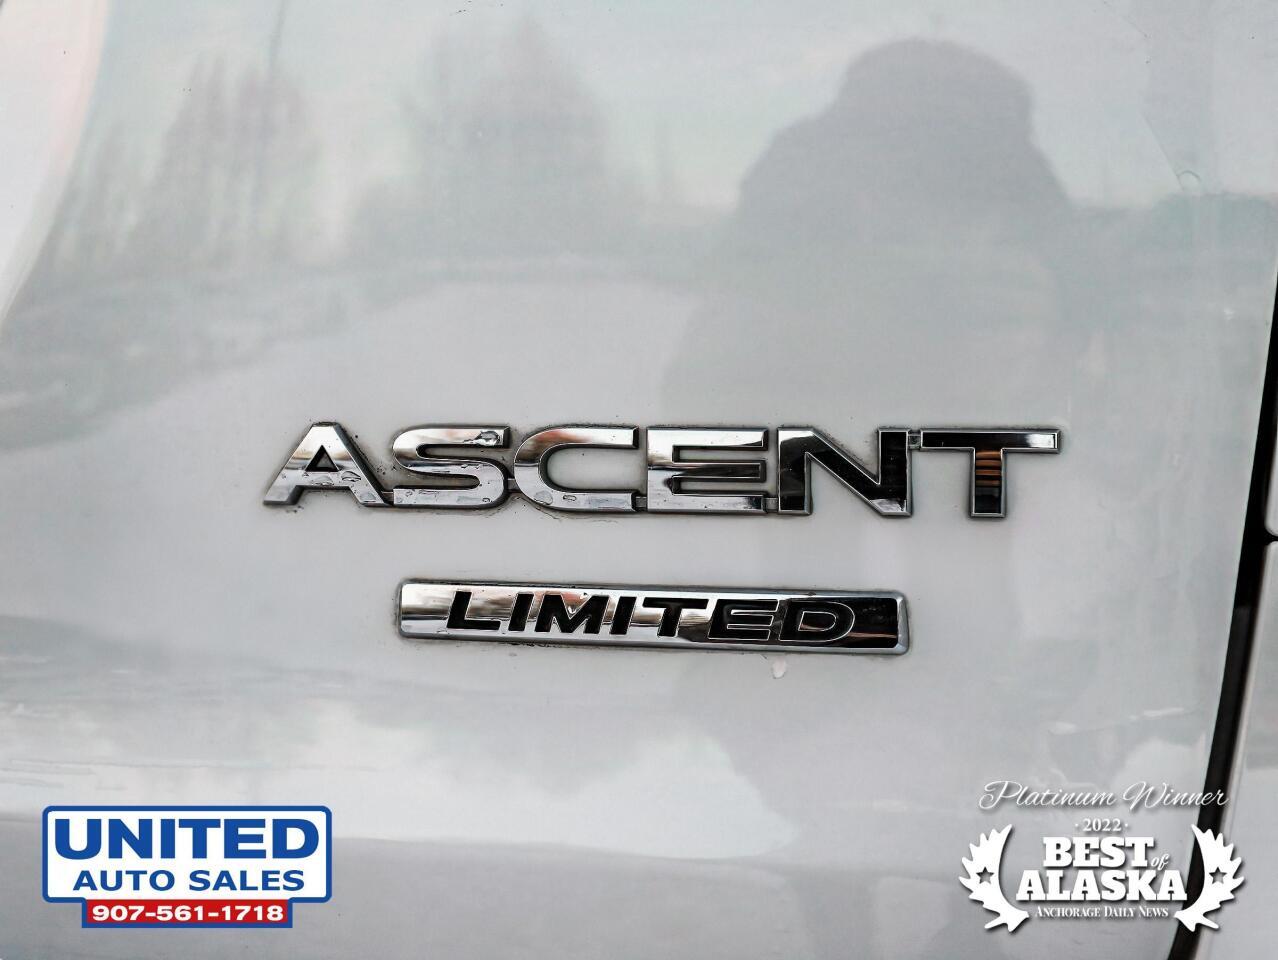 2019 Subaru Ascent Limited 7 Passenger AWD 4dr SUV 40